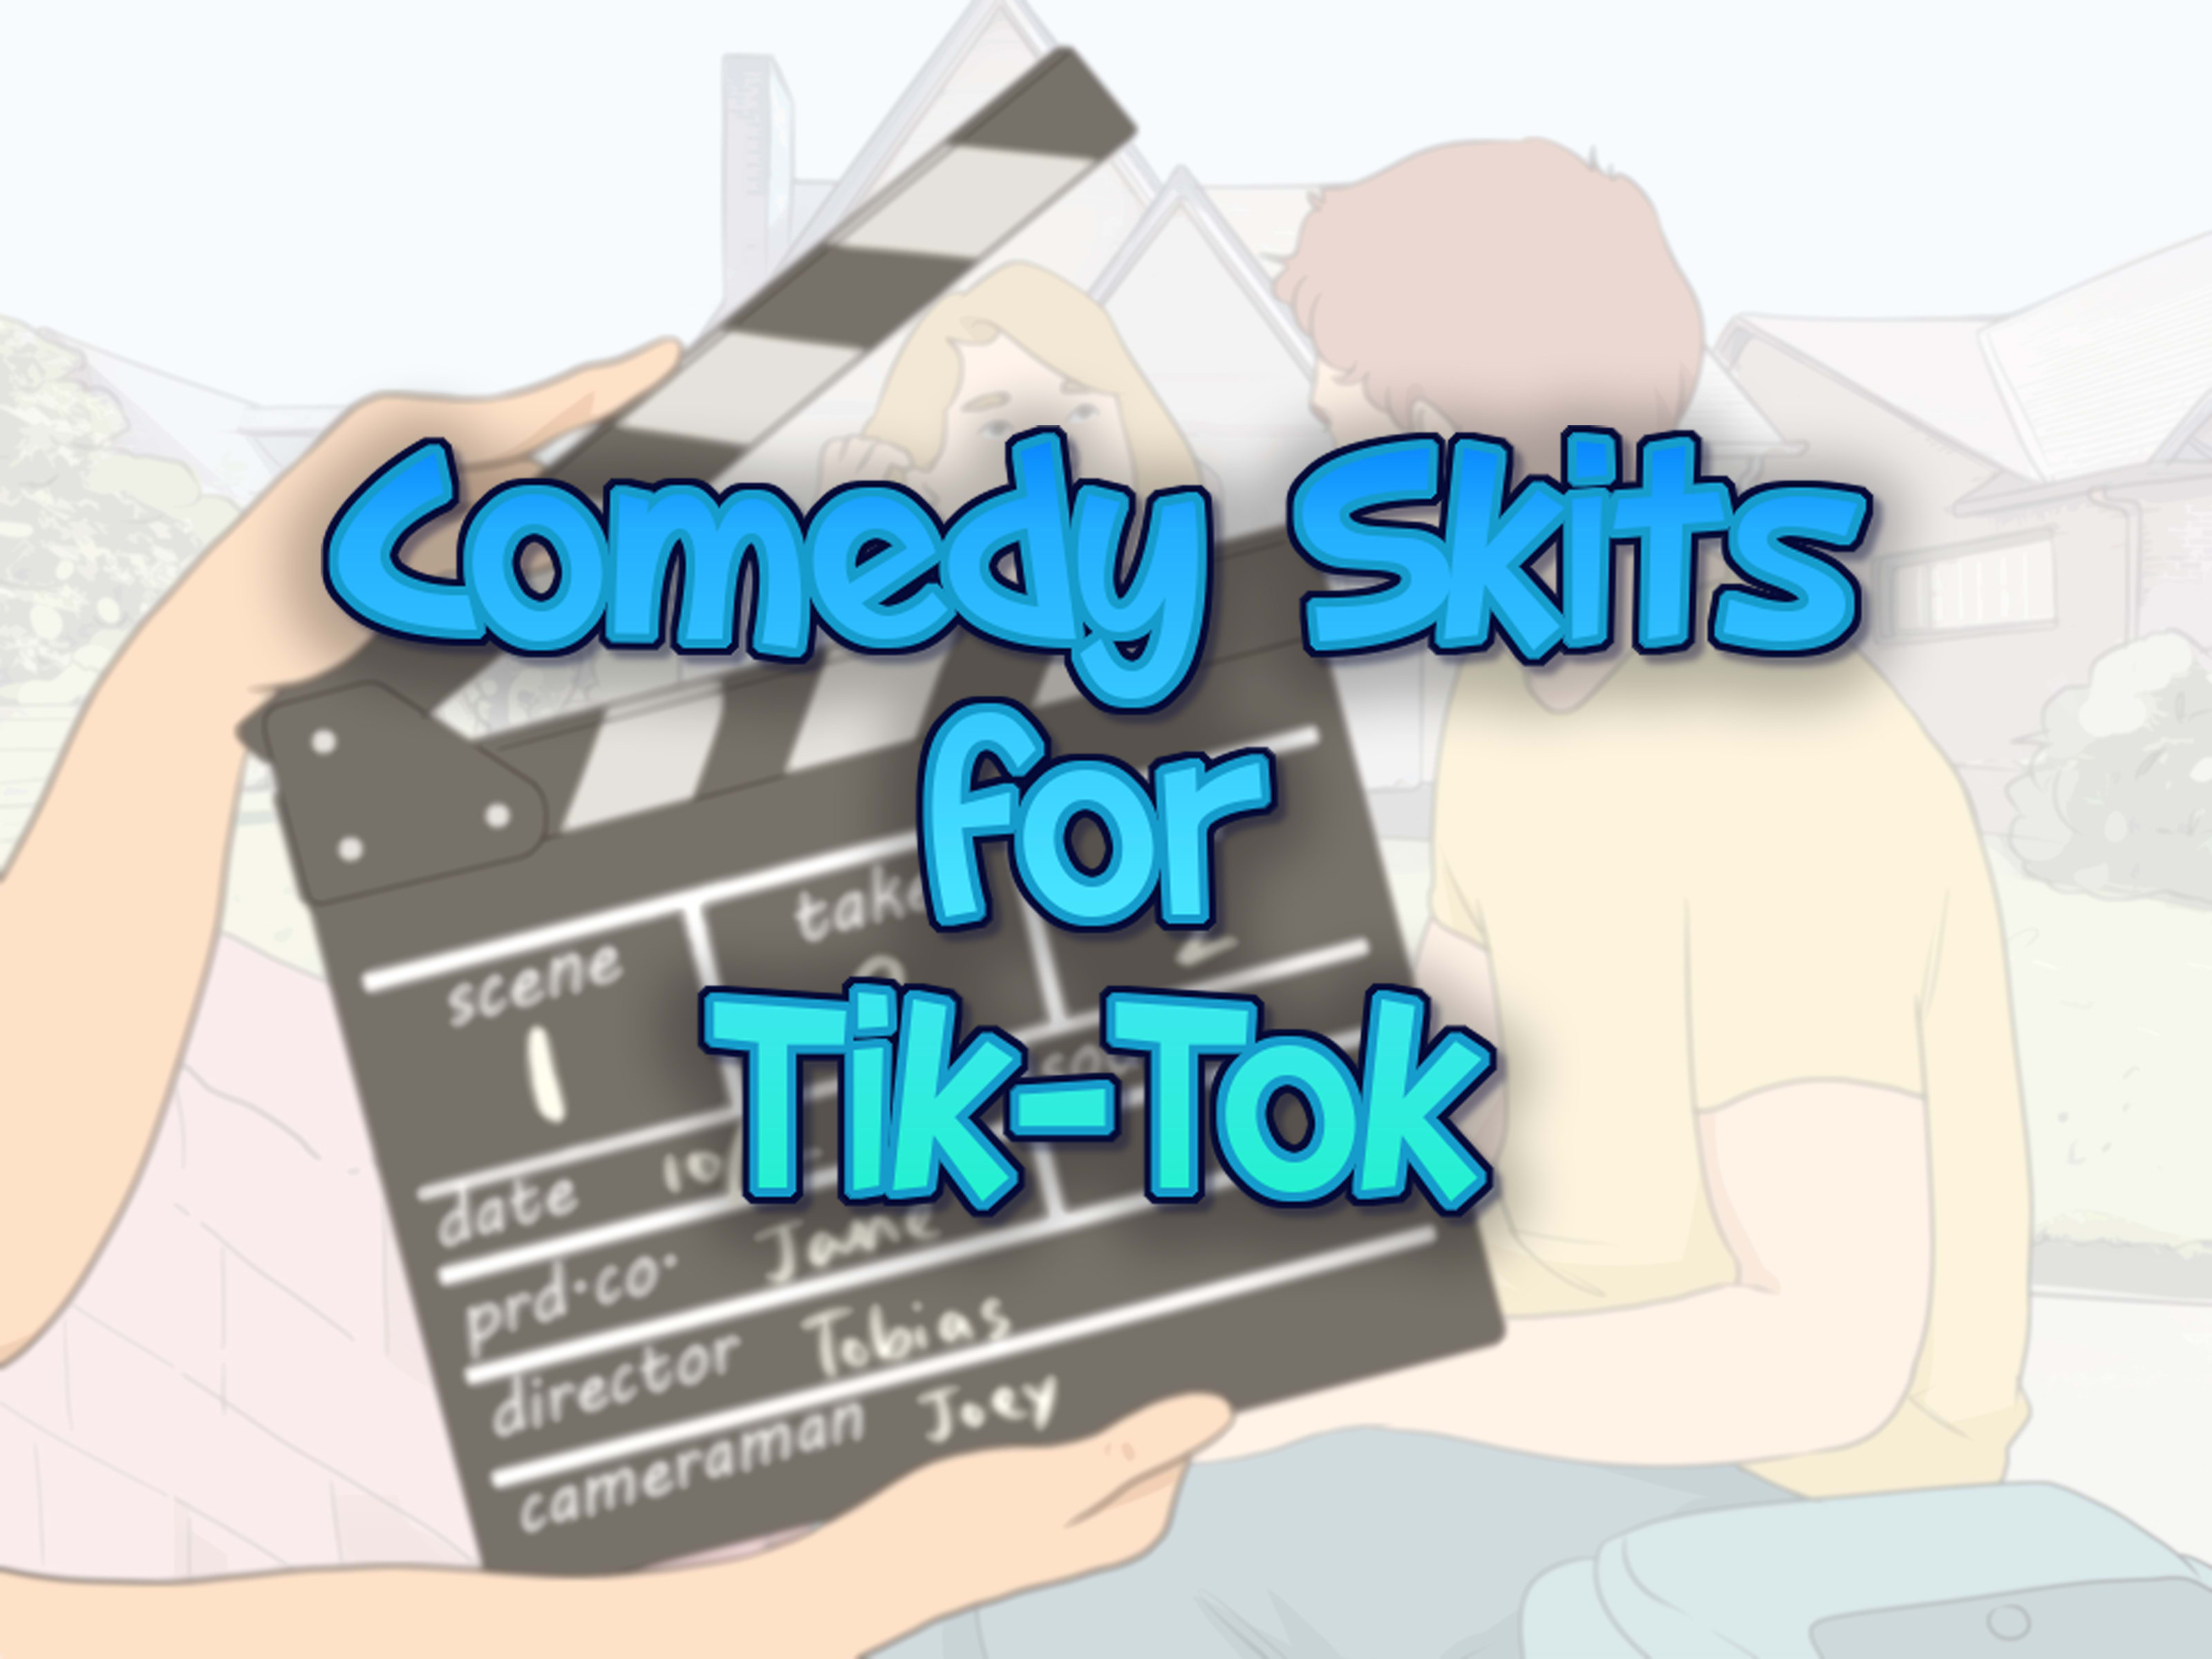 Write comedy skits for tik tok by Jordangascon  Fiverr